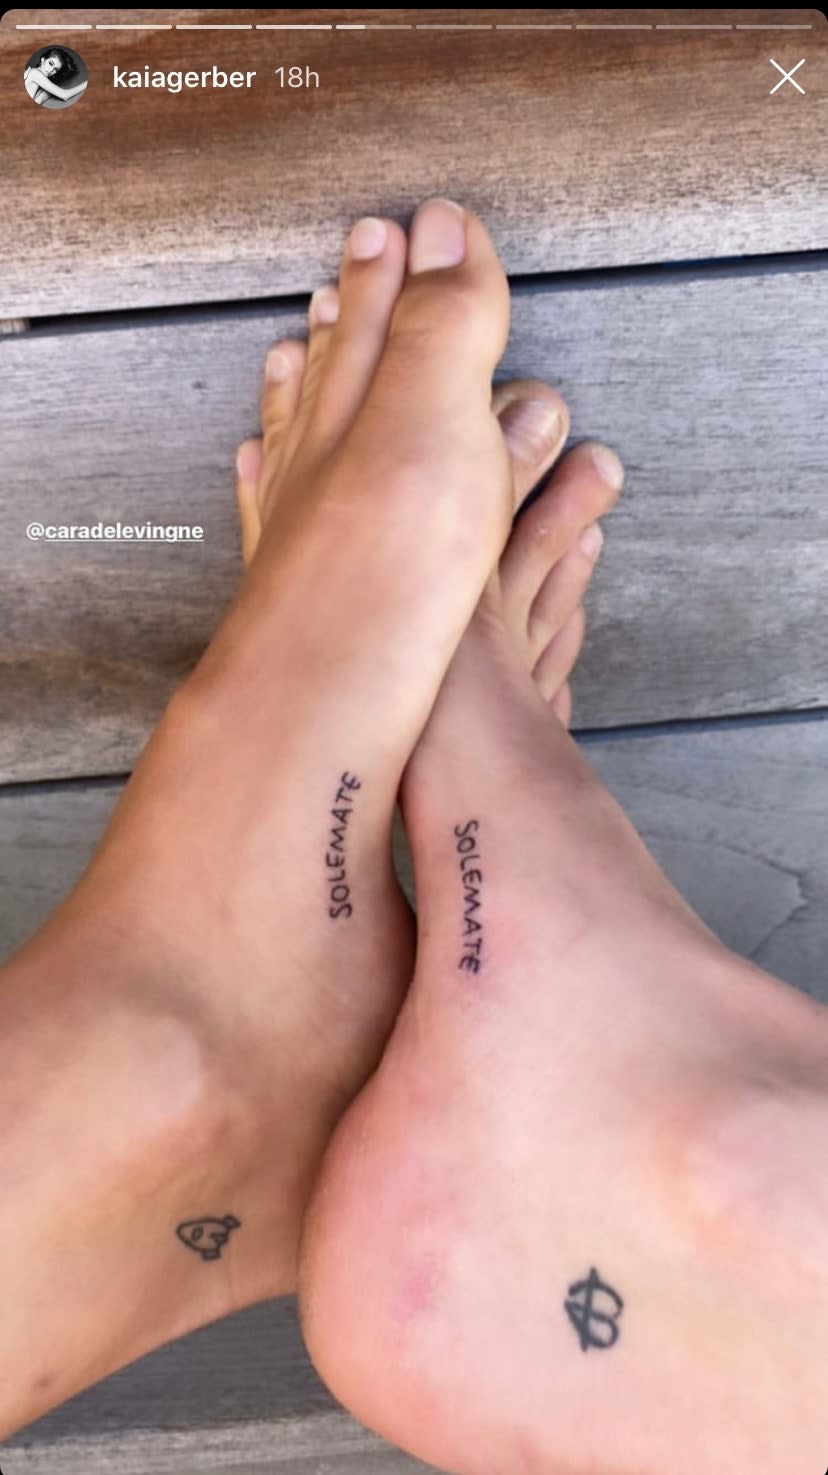 Kaia Gerber and Cara Delevingne’s Matching Foot Tattoos